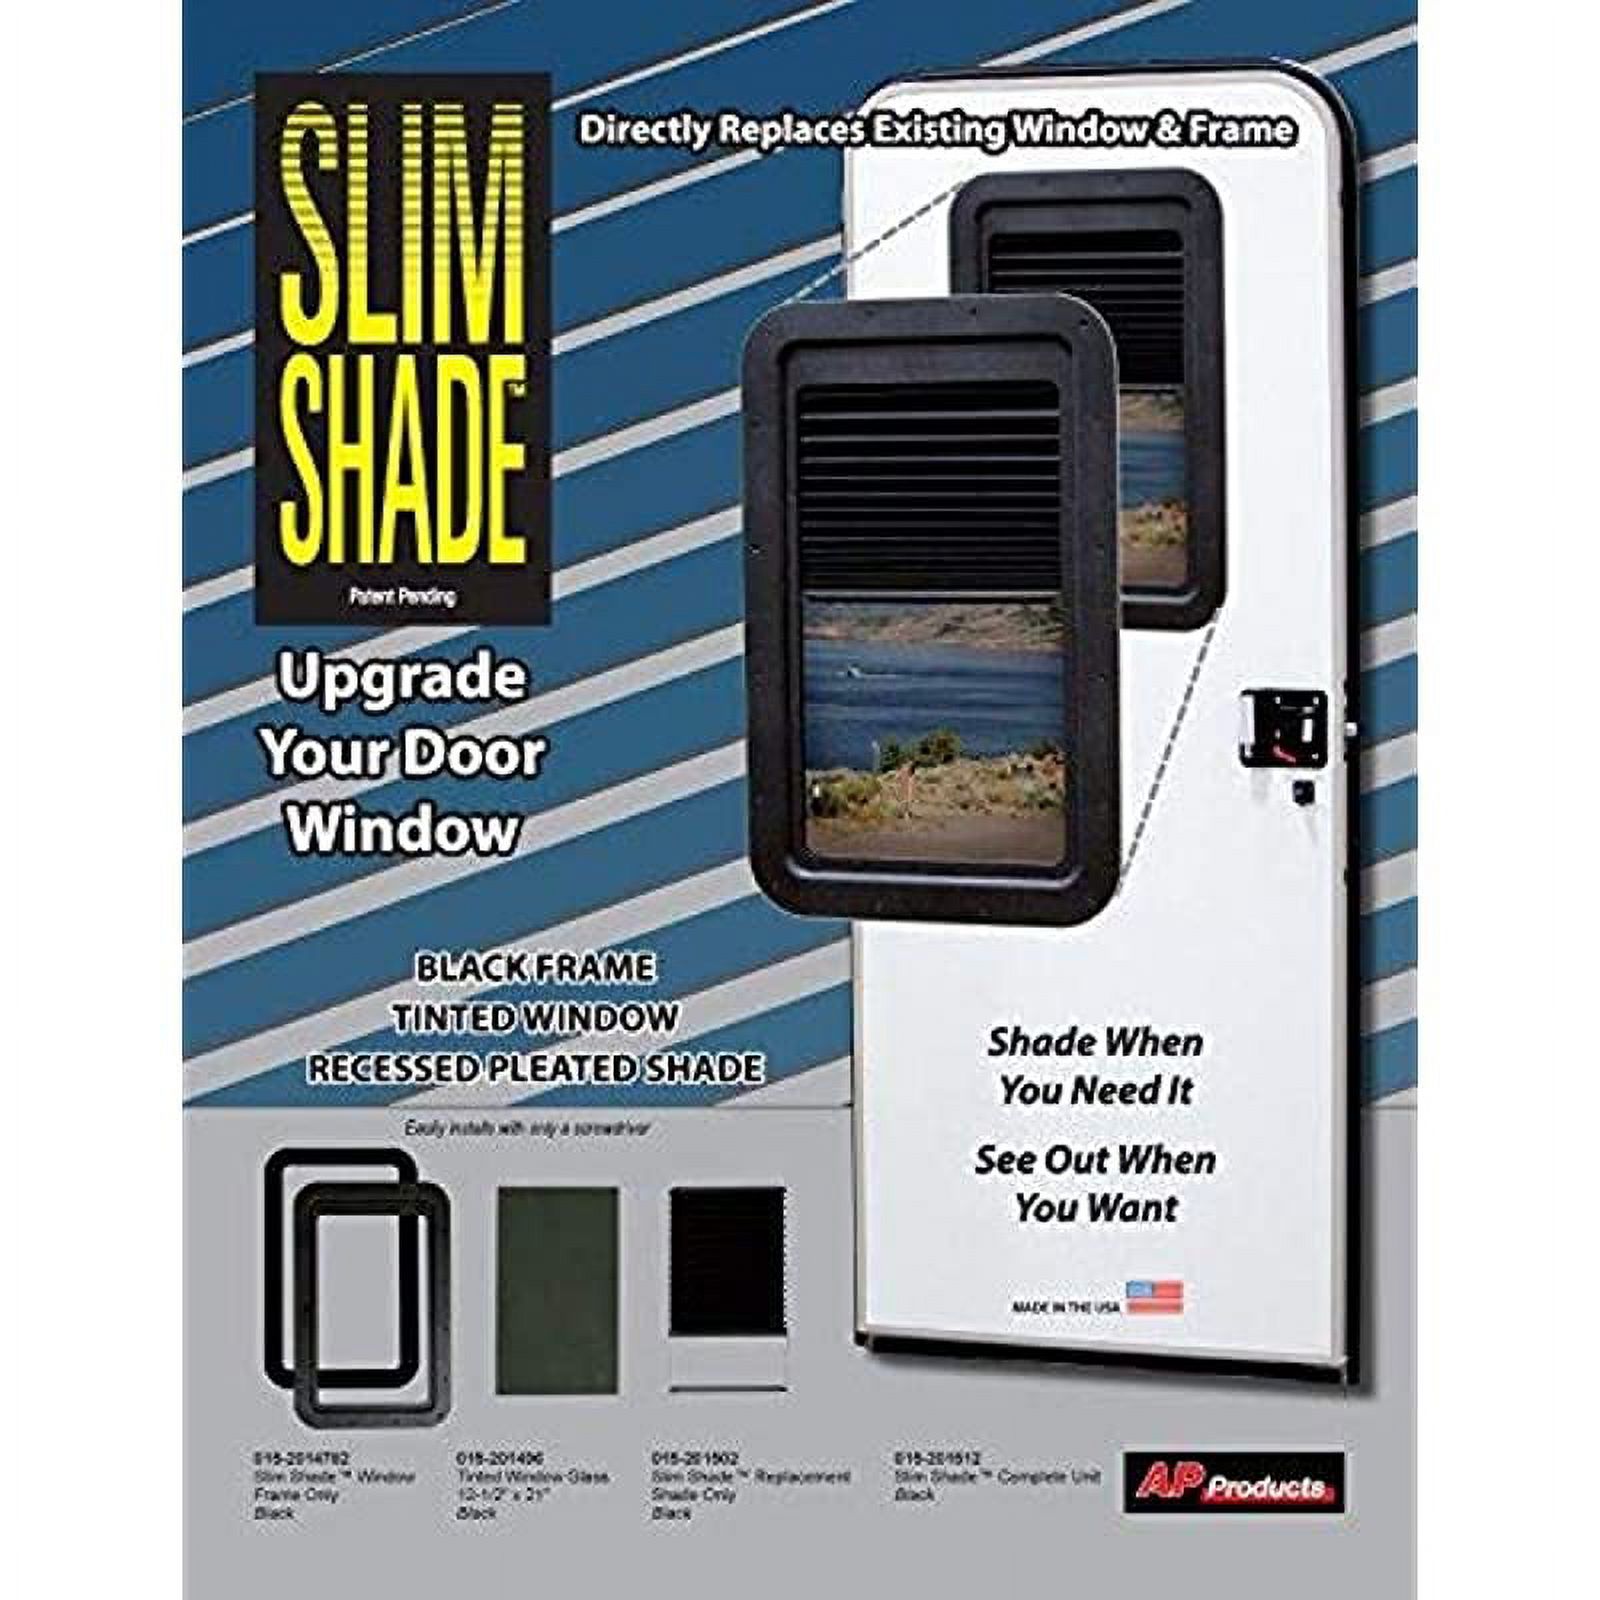 AP Products 015-201512 Slim Shade Upgrading Your Door Window - image 2 of 3